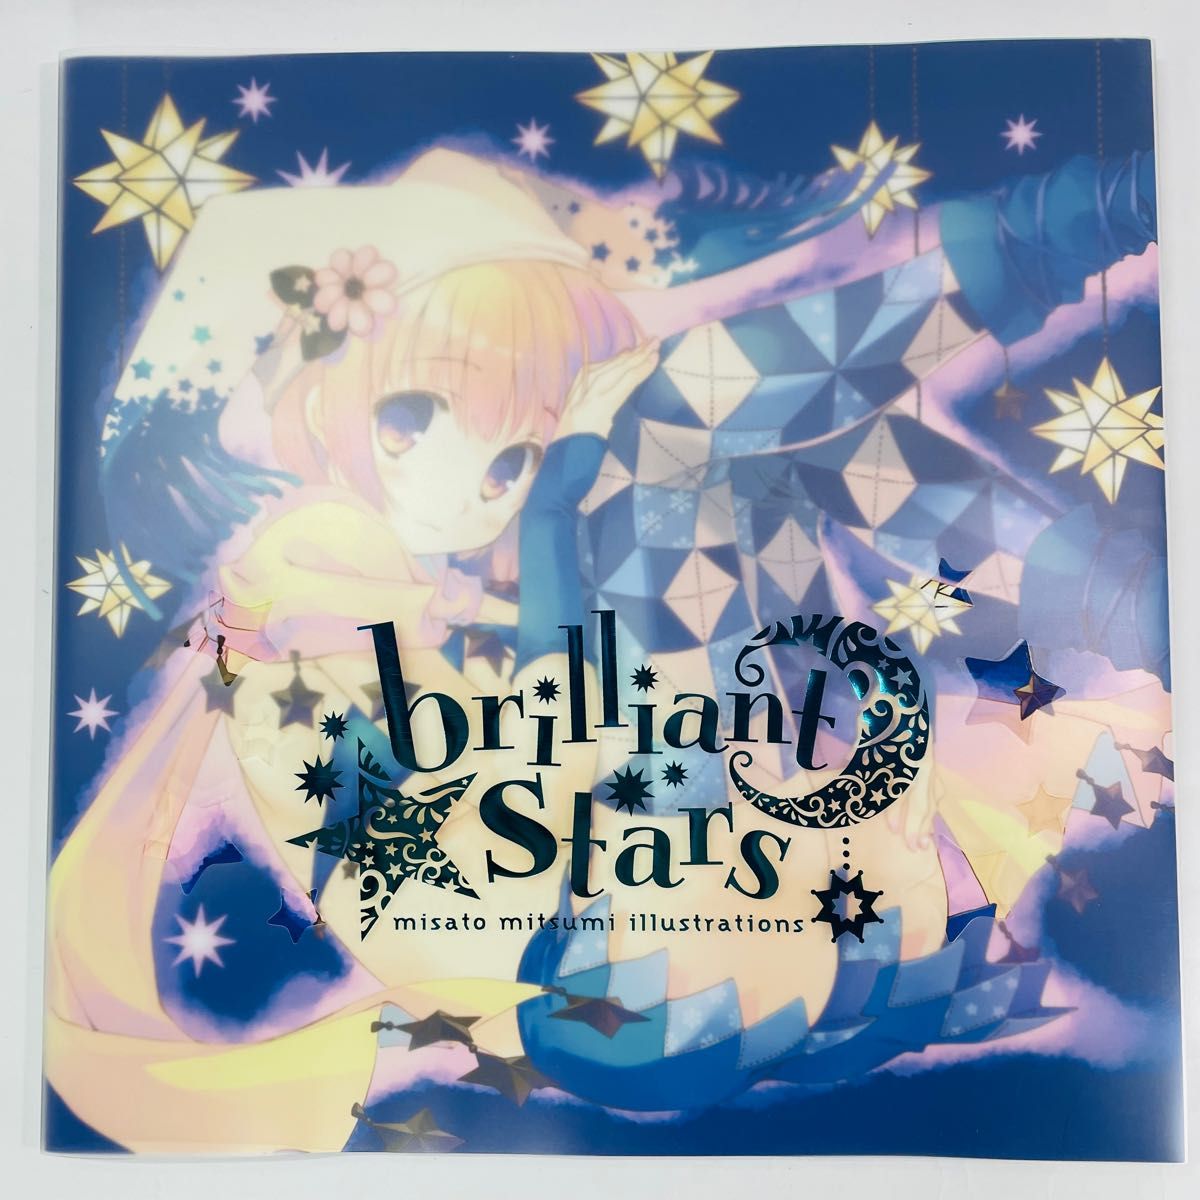 brilliant Stars misato mutsumi illustrations みつみ美里